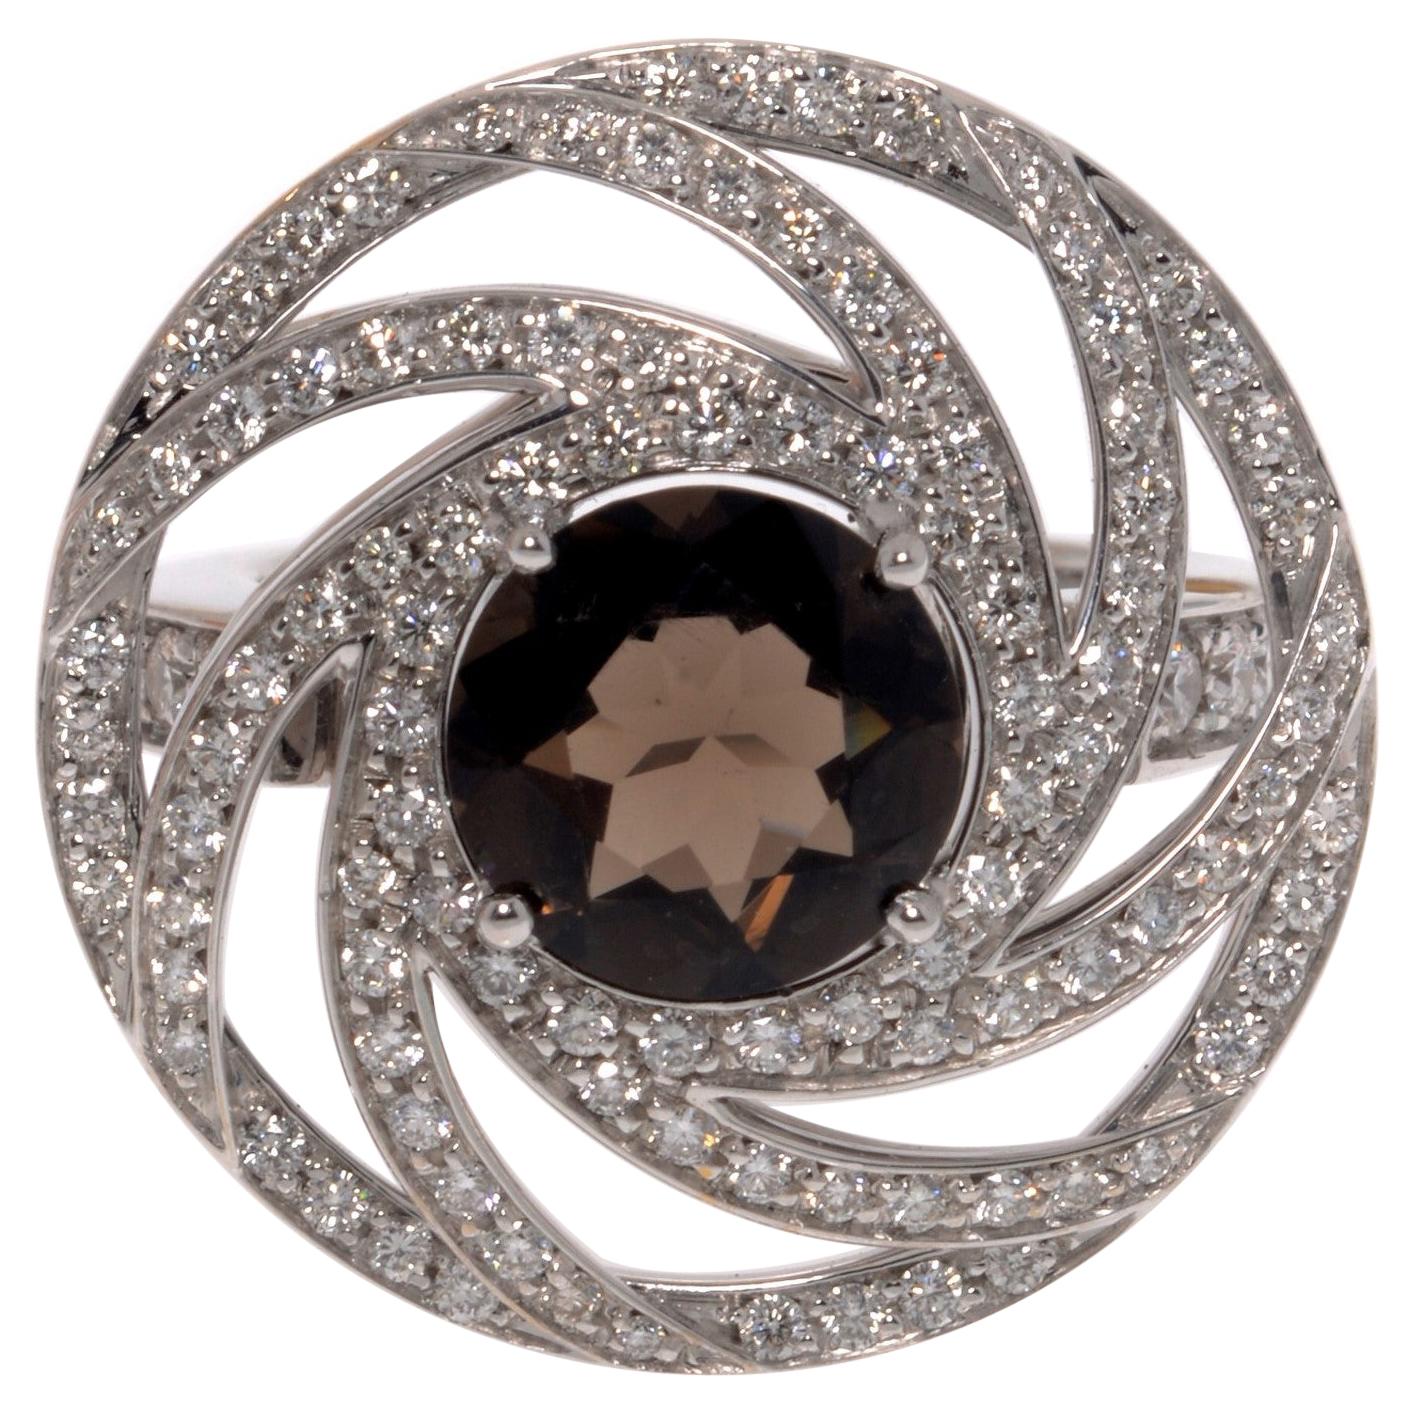 Luca Carati Smoky Quartz & Diamond Ring 18K White Gold 1.18 Cttw Size 7 For Sale